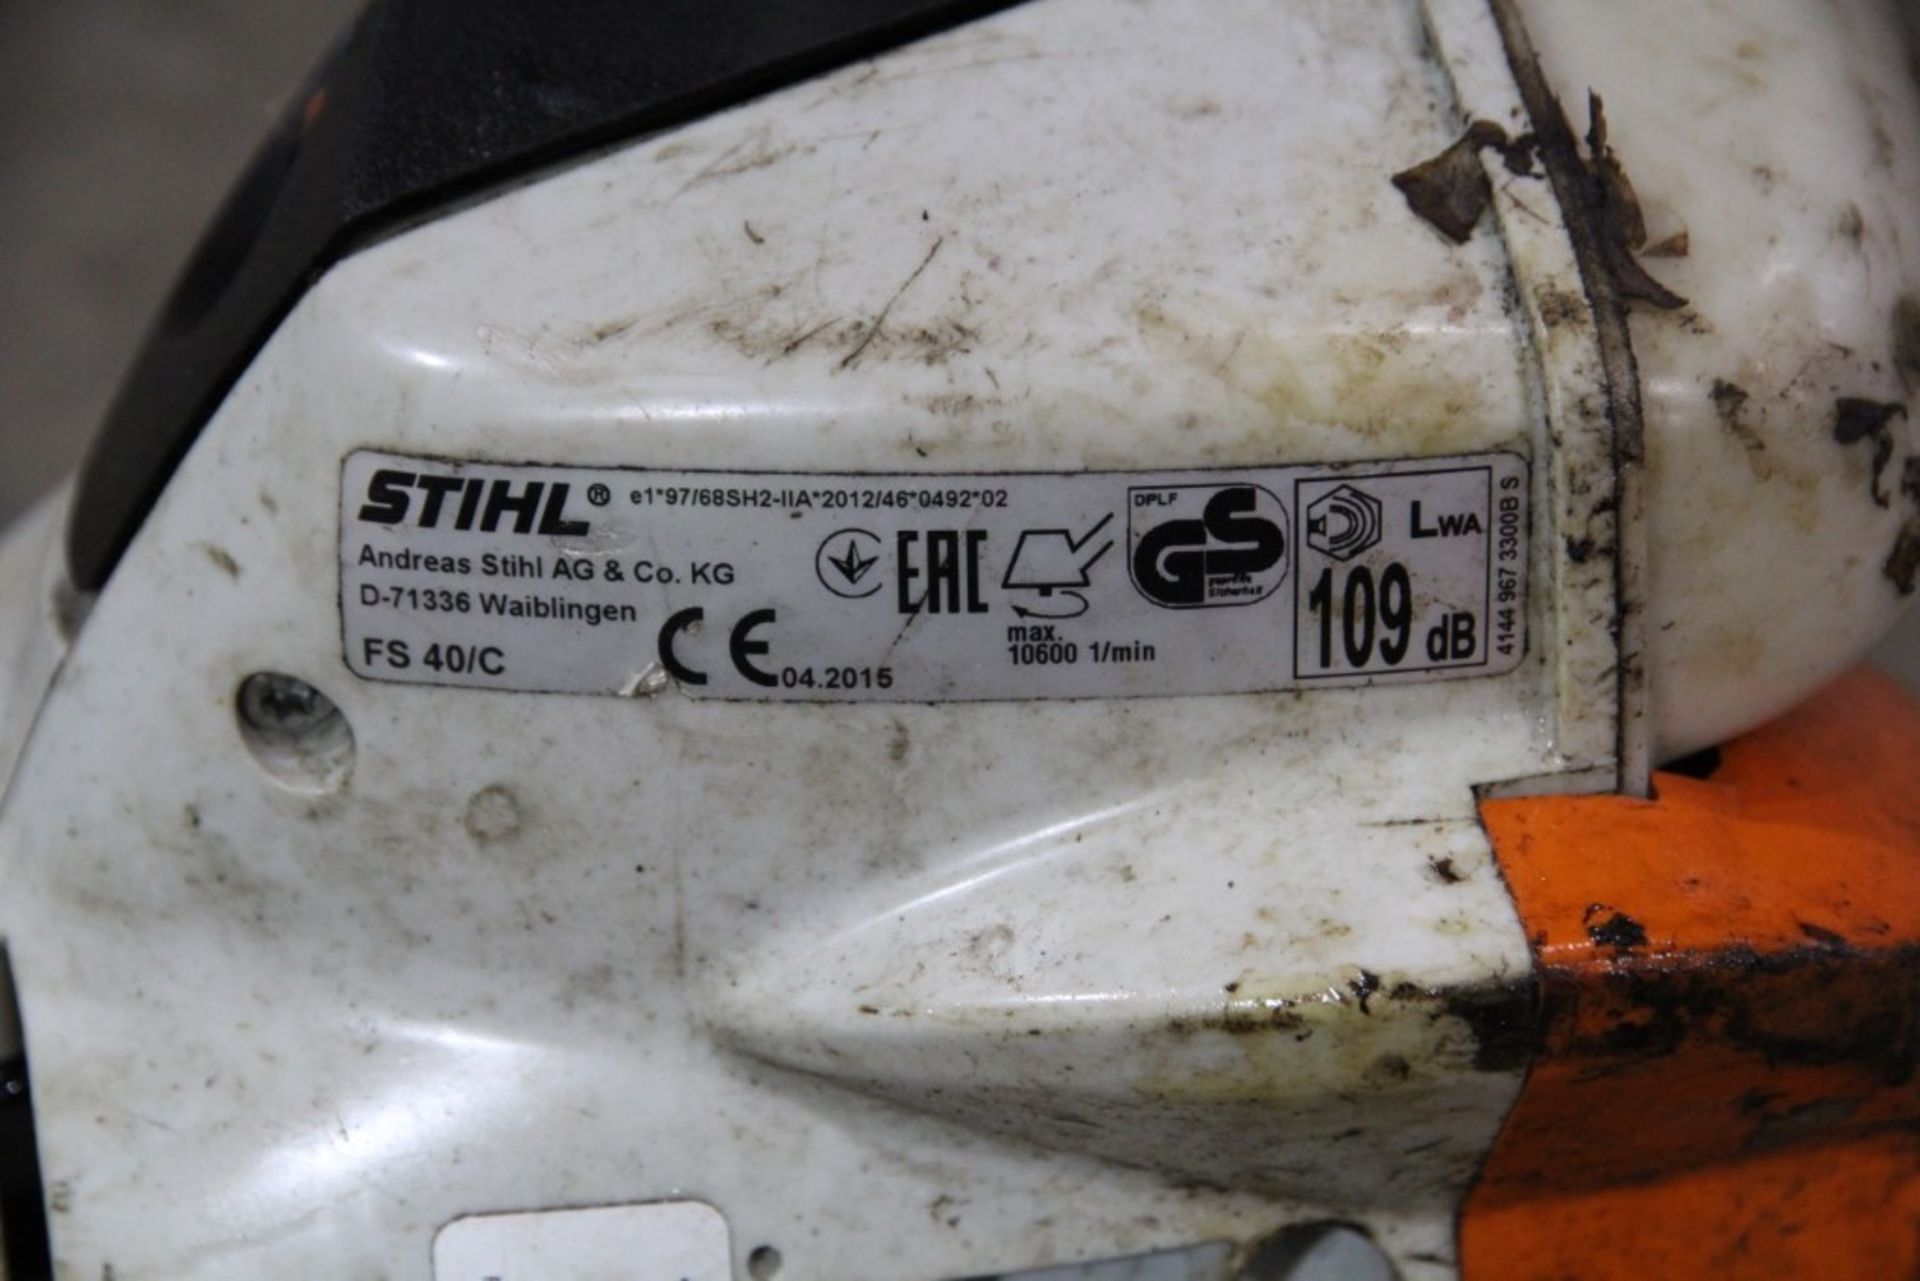 Stihl FS 40 C Petrol Brush Cutter - Image 4 of 4